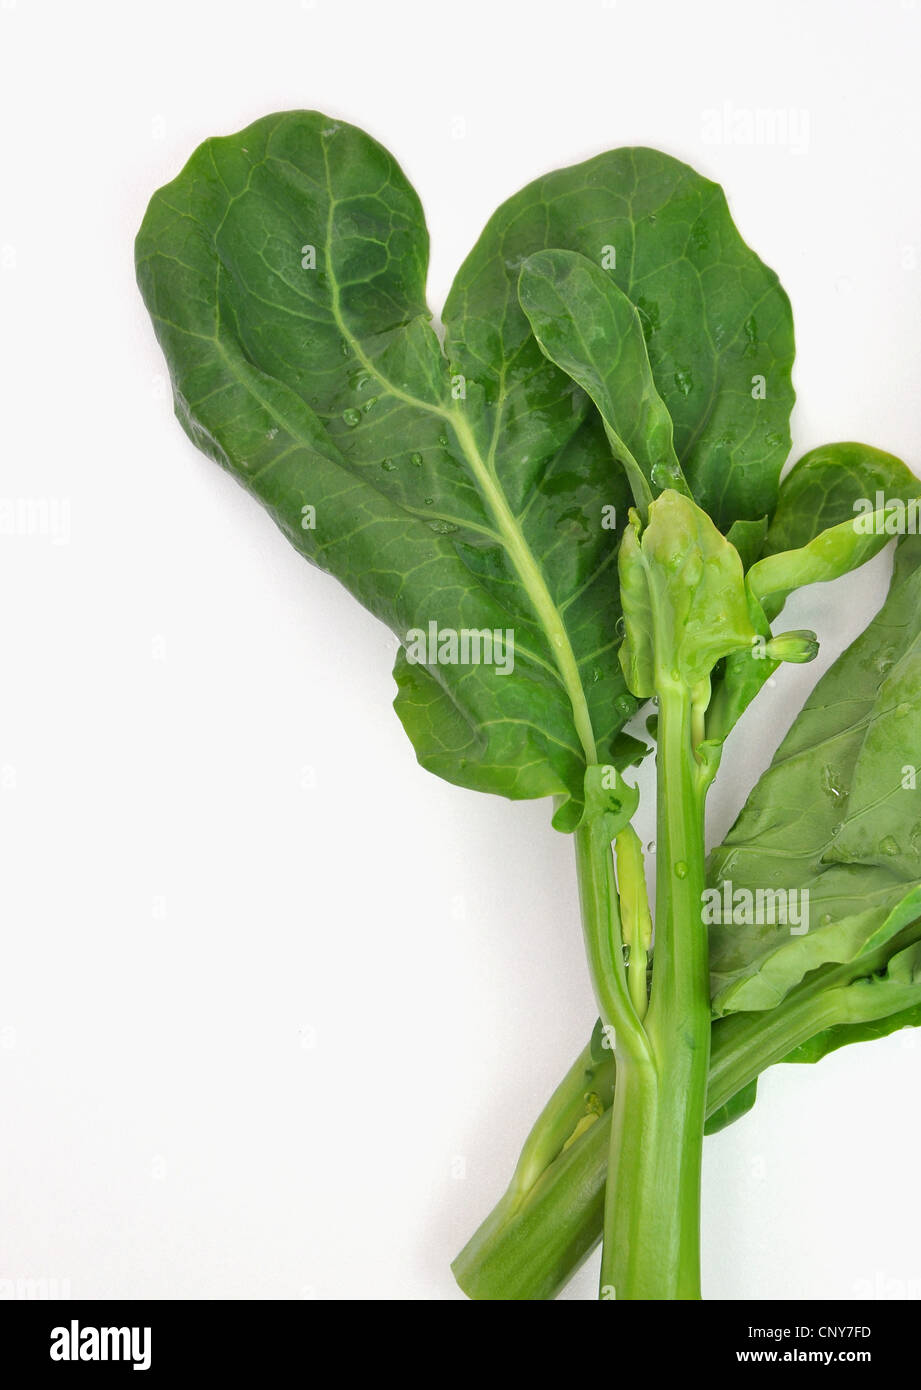 Nature chinese vegetable Stock Photo - Alamy